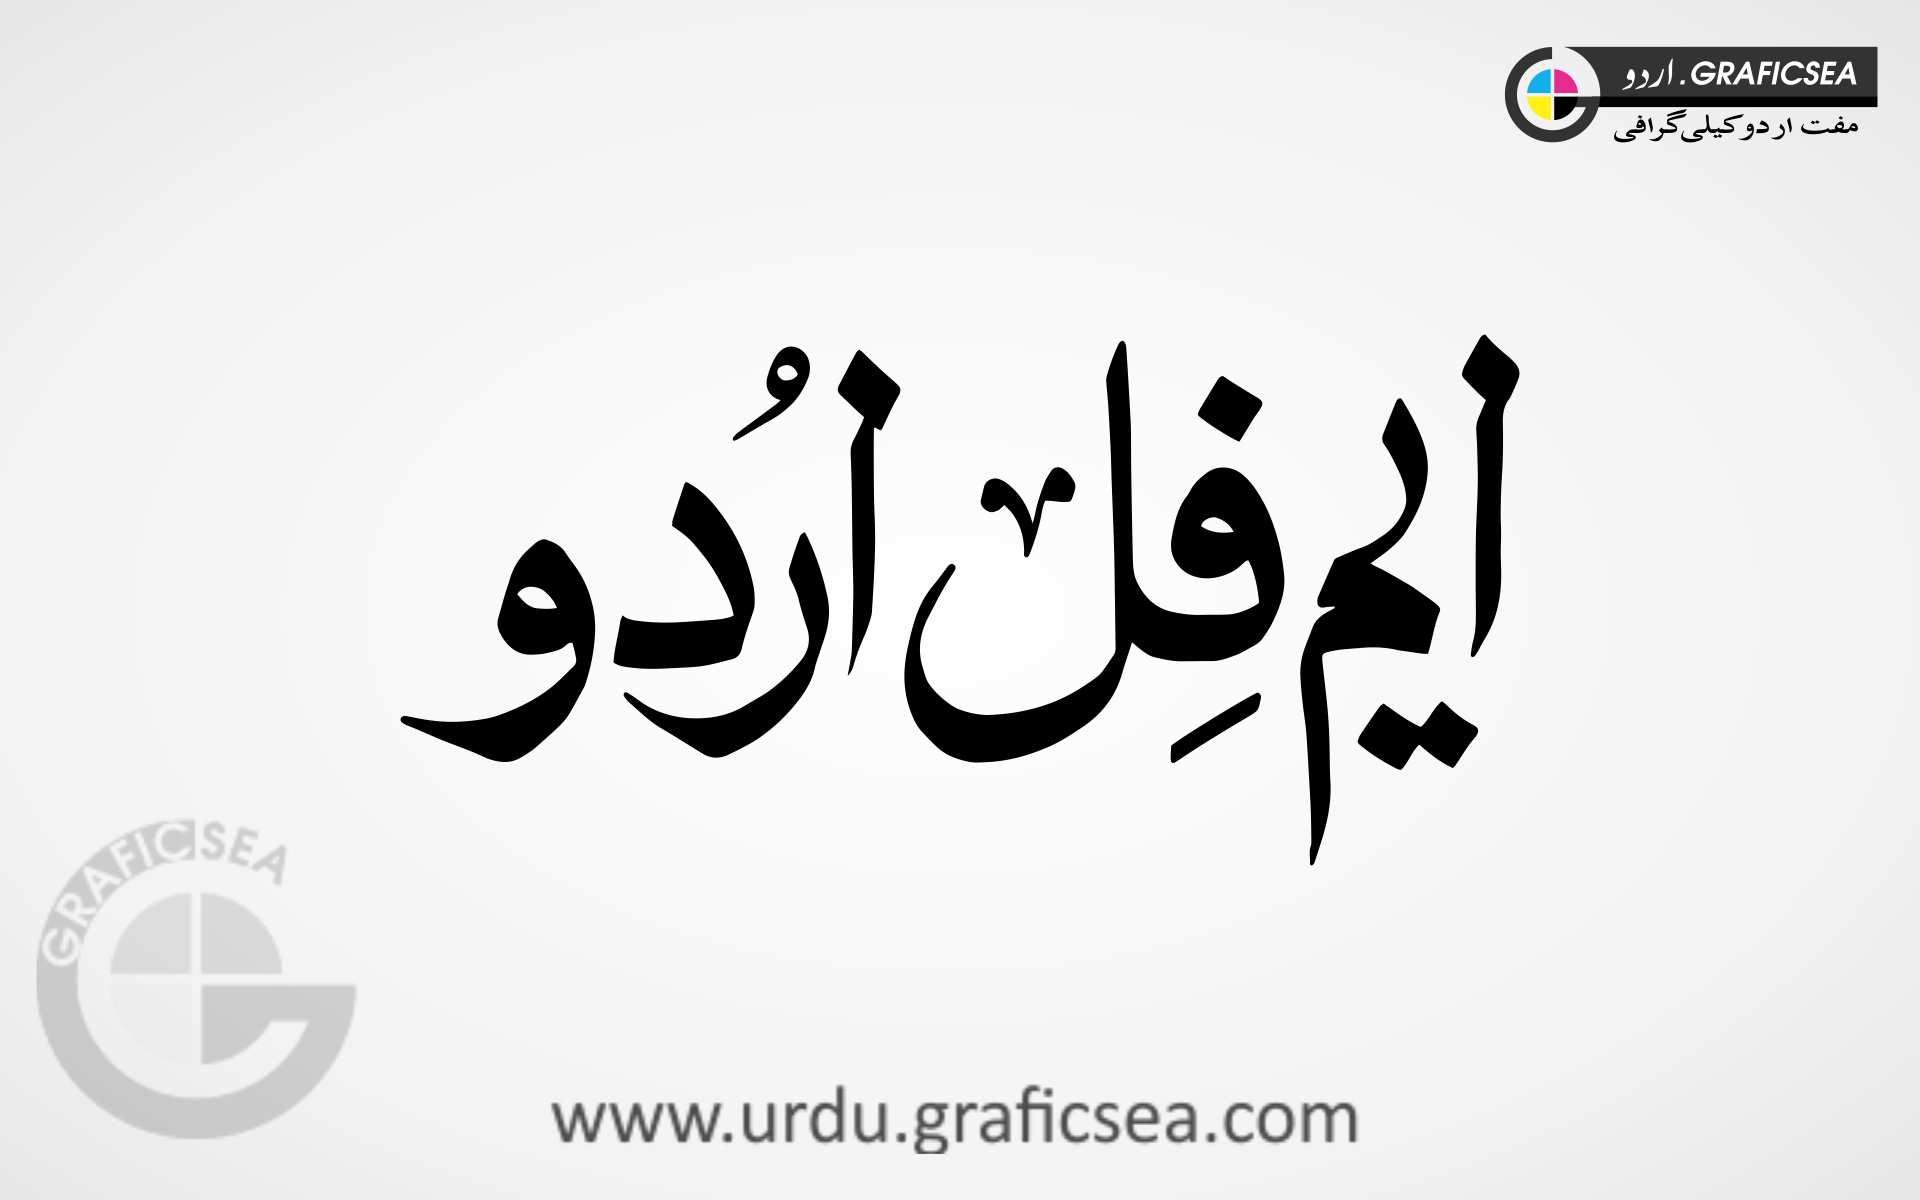 M.phil Digree Urdu Calligraphy